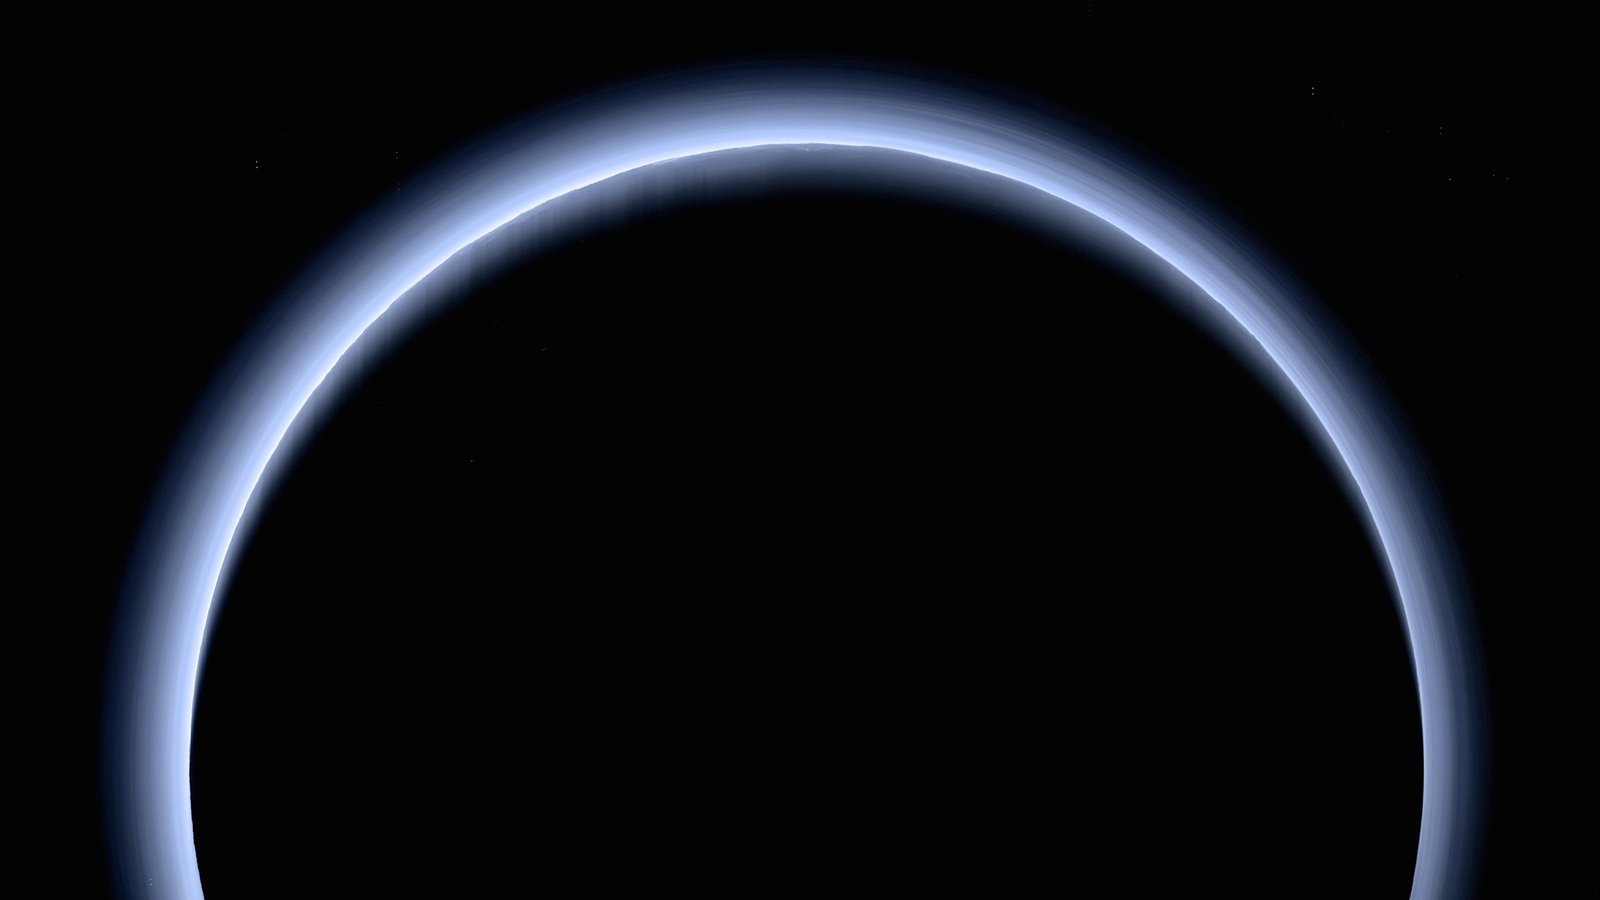 A white halo illuminates Pluto’s horizon against a black foreground and background.